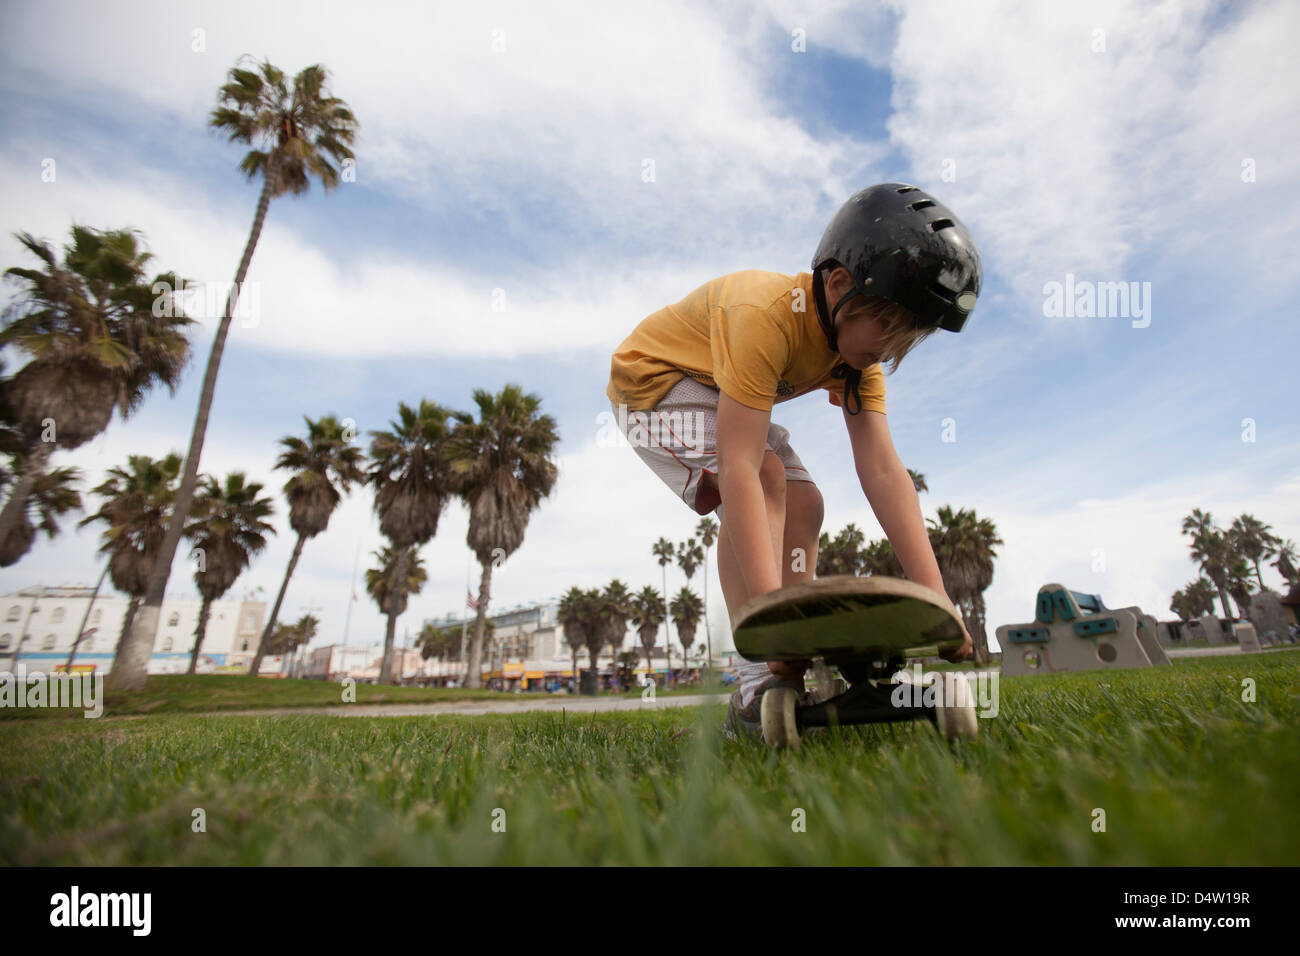 Boy putting skateboard dans grass at park Banque D'Images